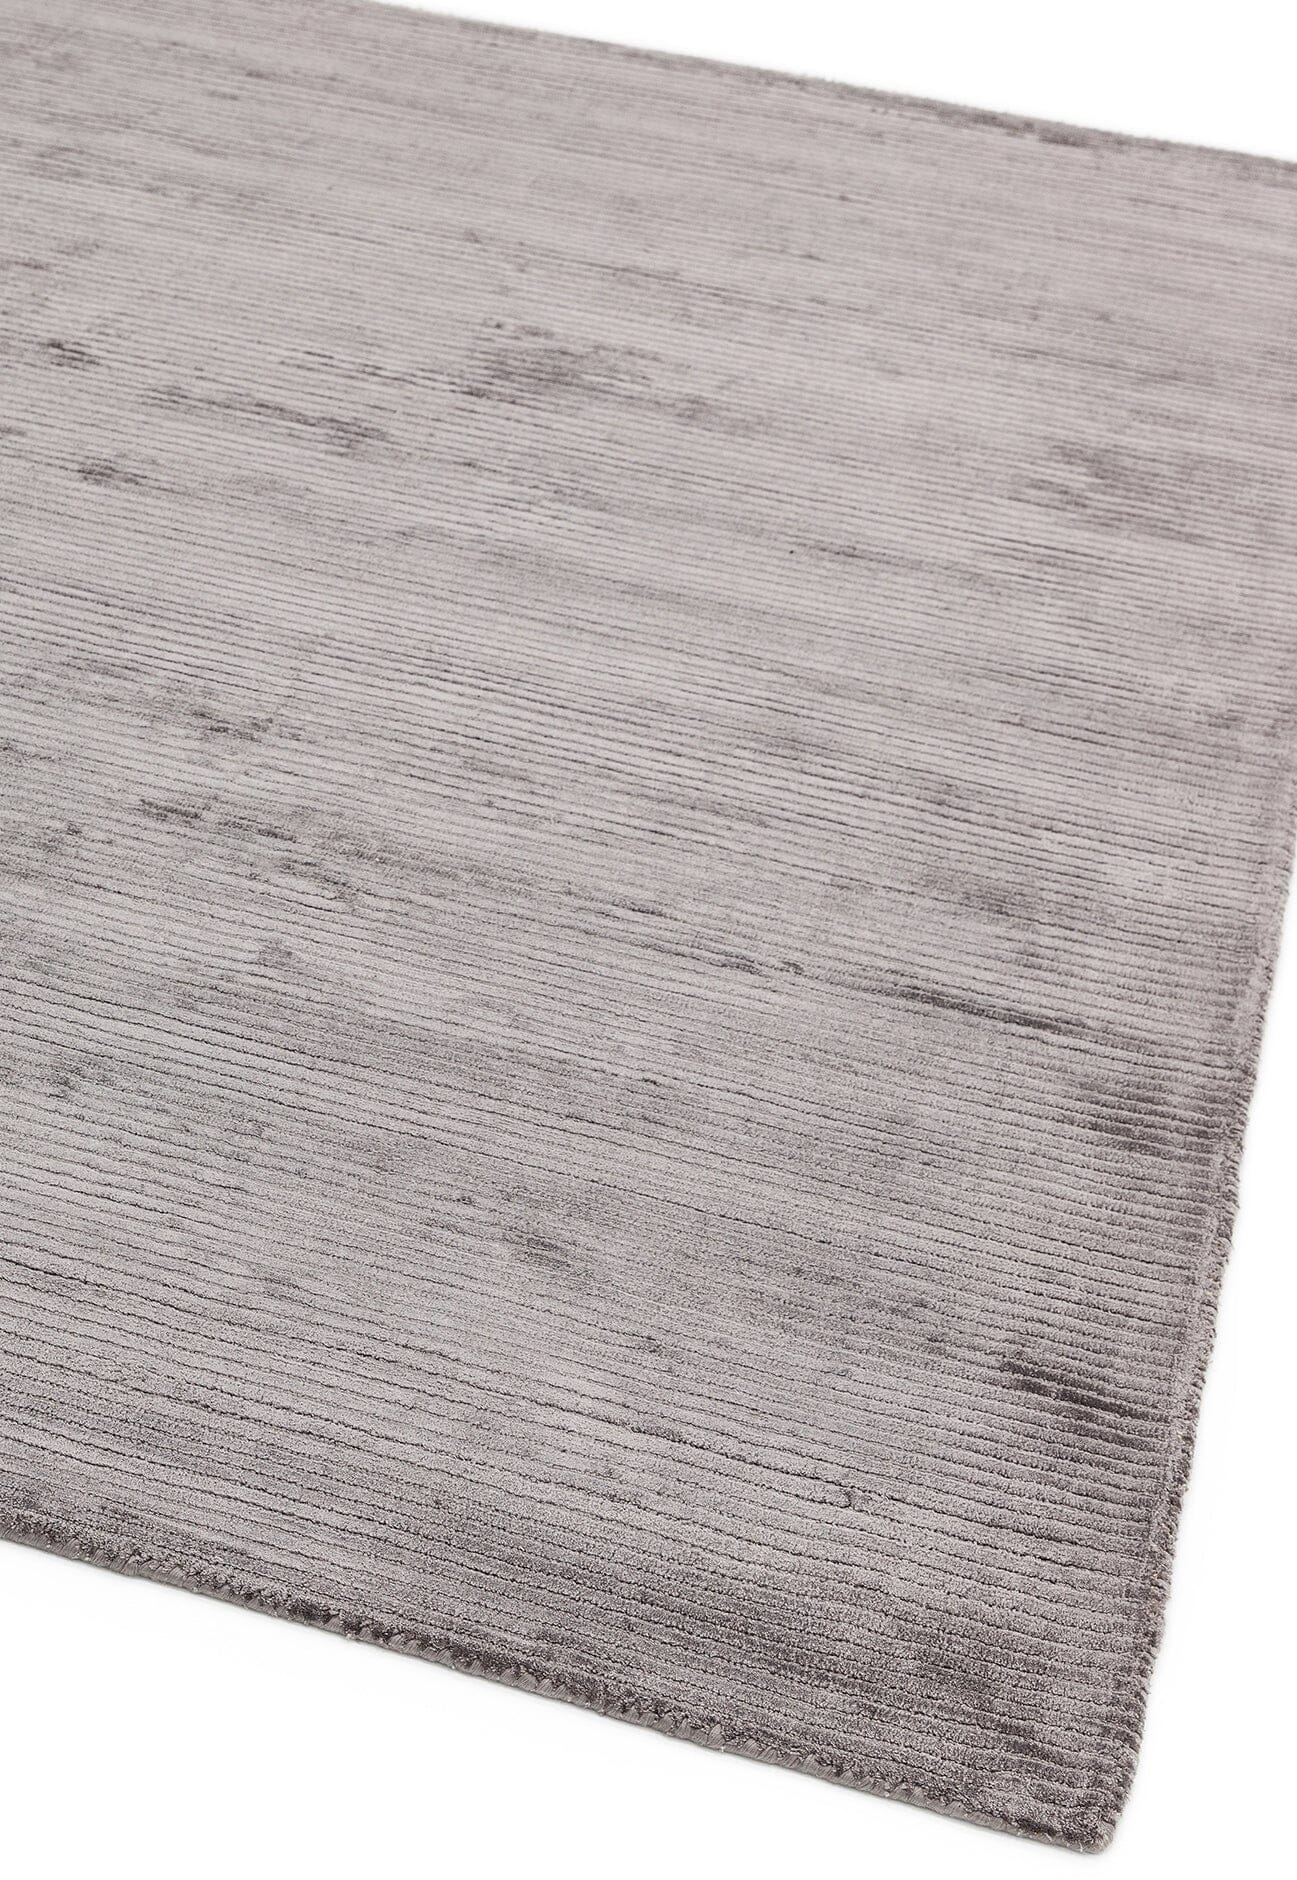 Asiatic Carpets Bellagio Hand Woven Rug Silver - 120 x 180cm